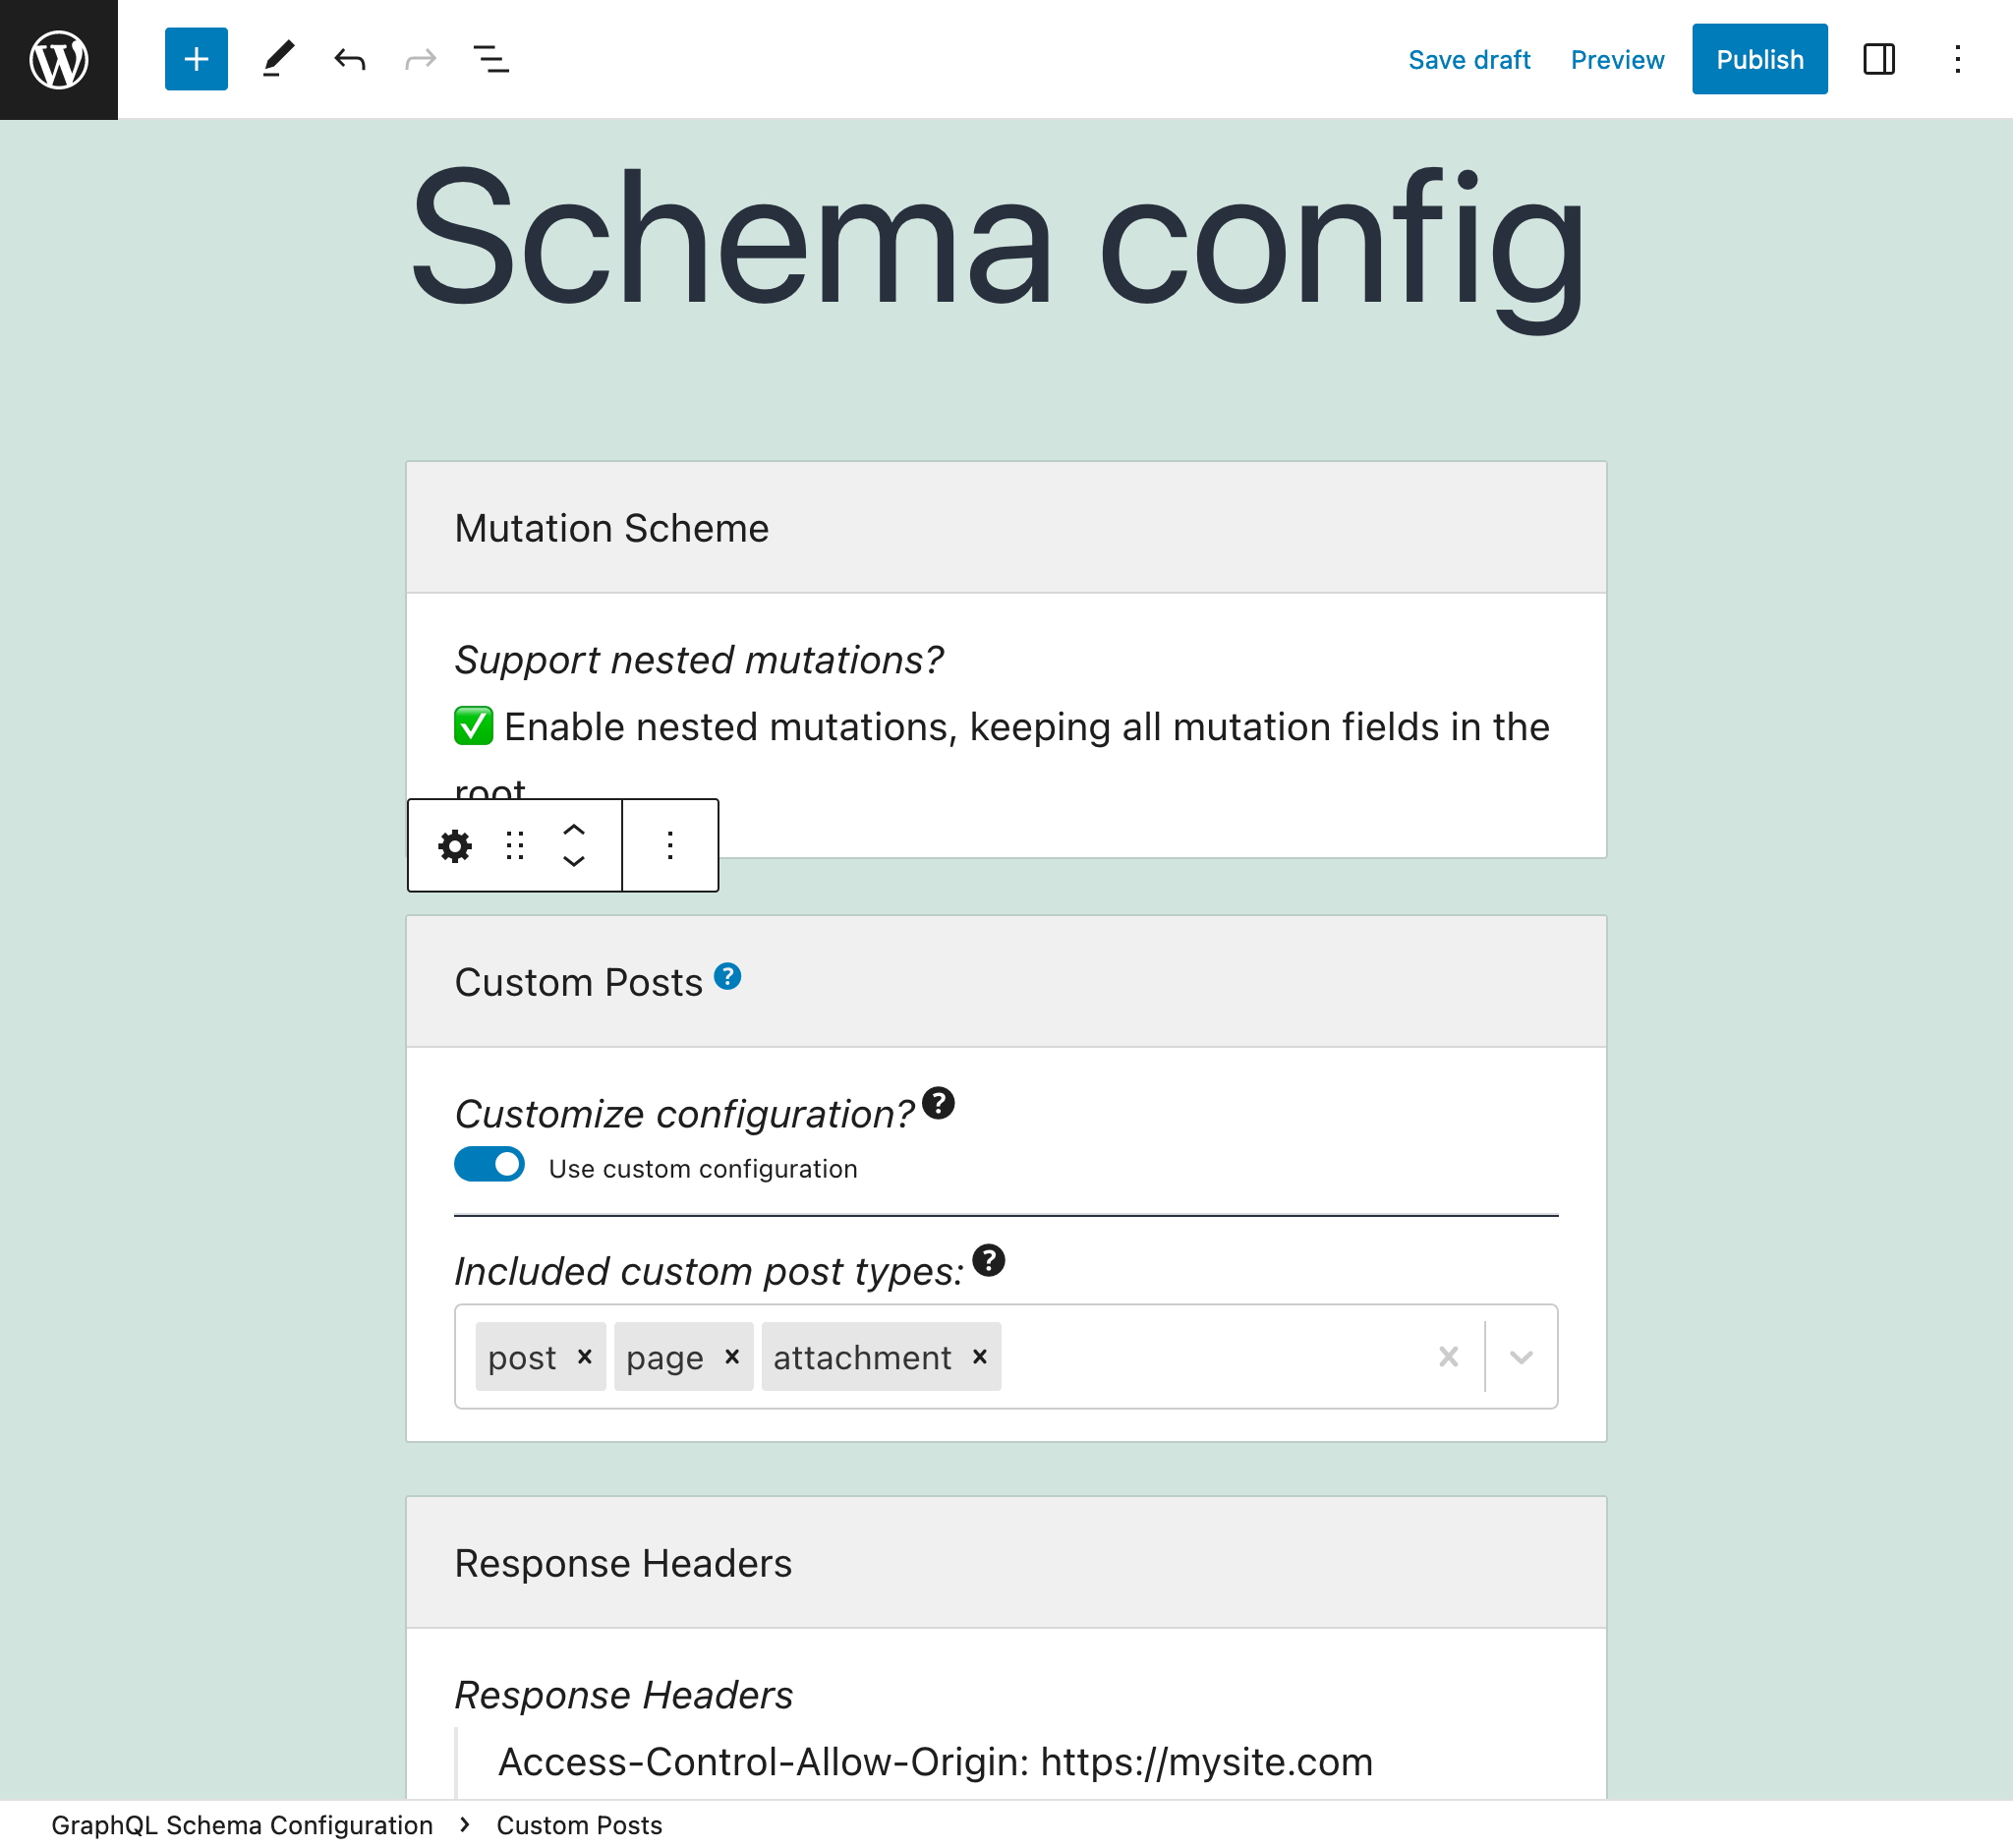 Endpoints are configured via Schema Configurations